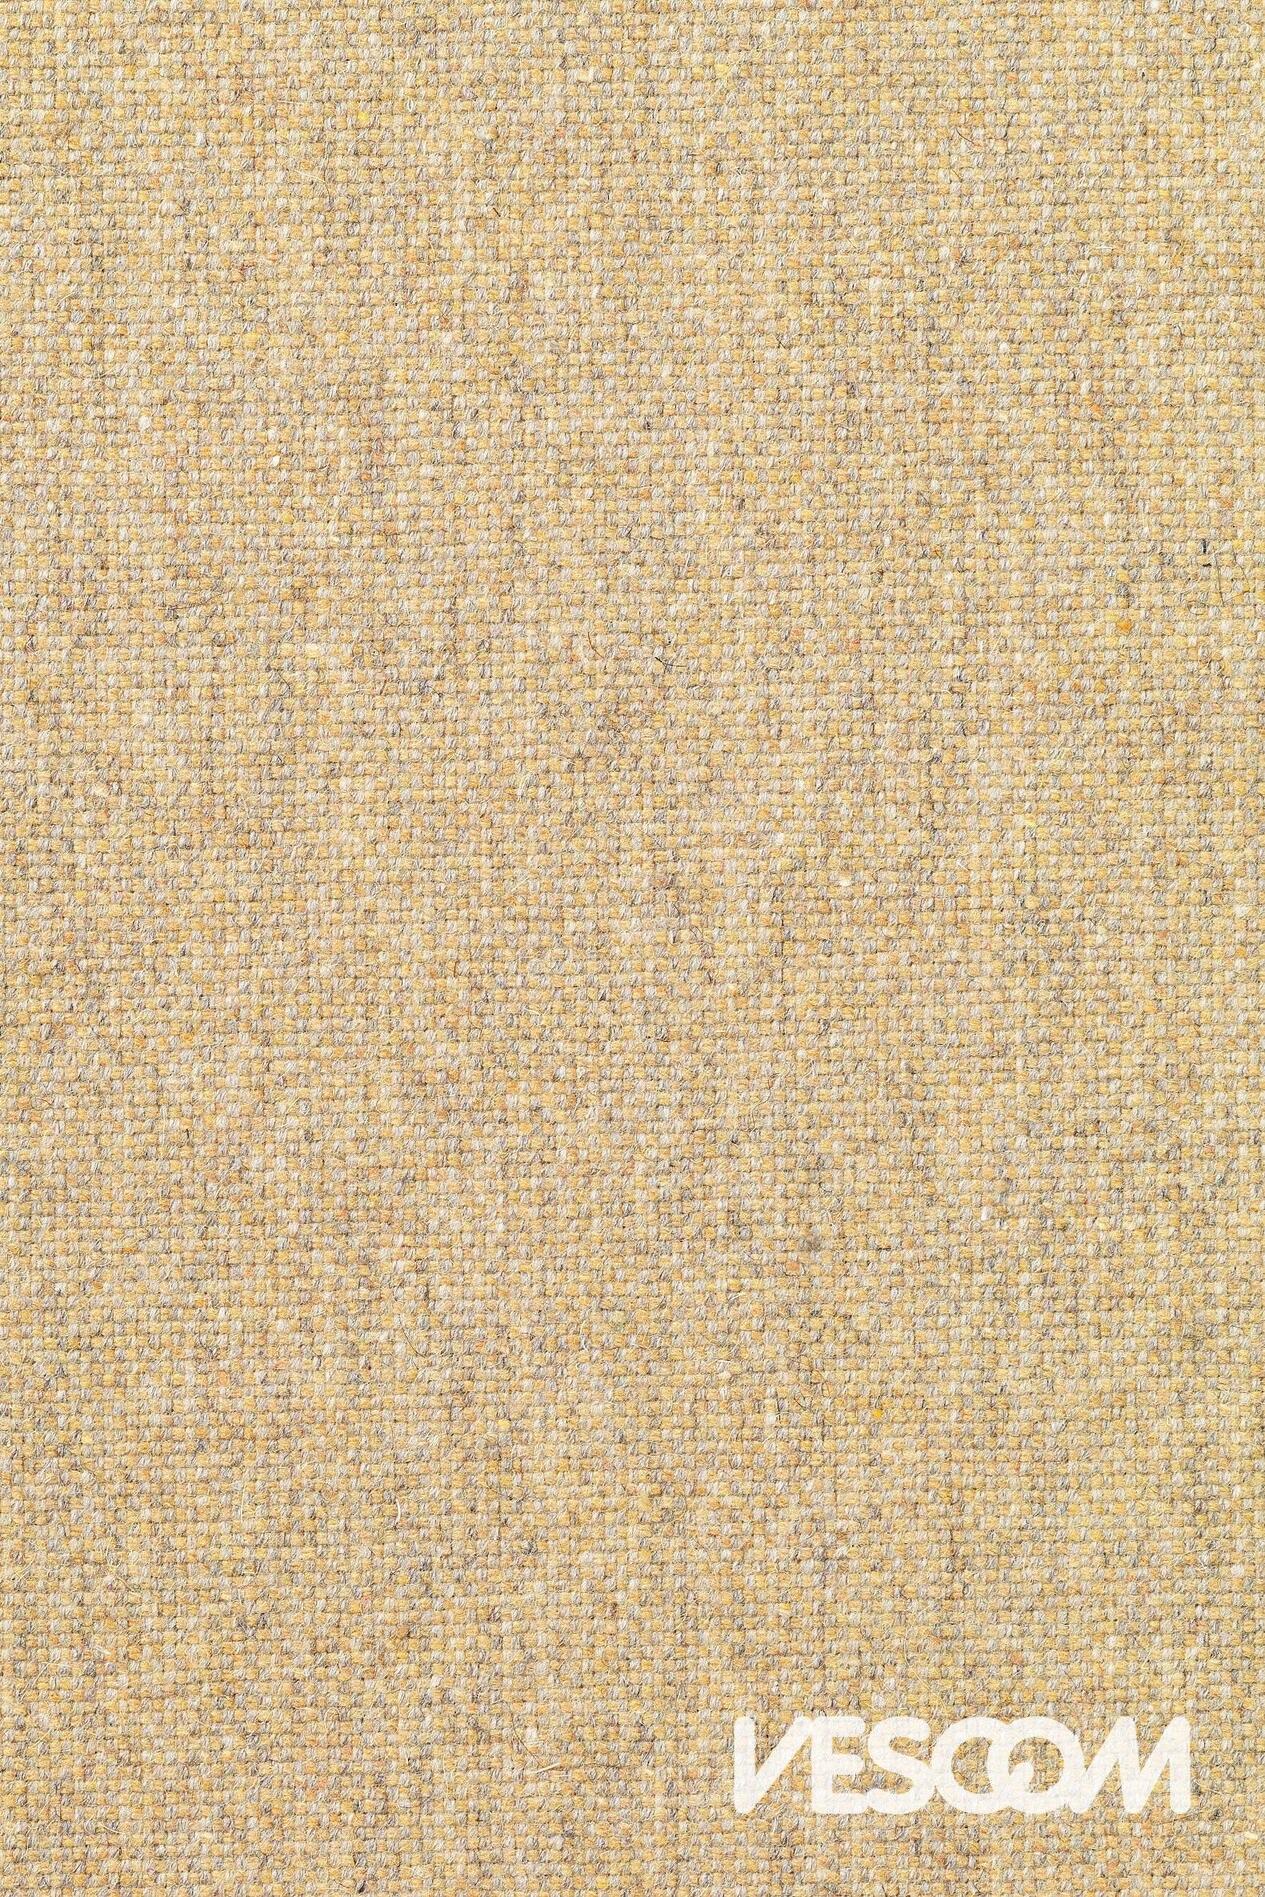 Vescom-Wolin-Upholstery-Fabric-7050.24.jpg